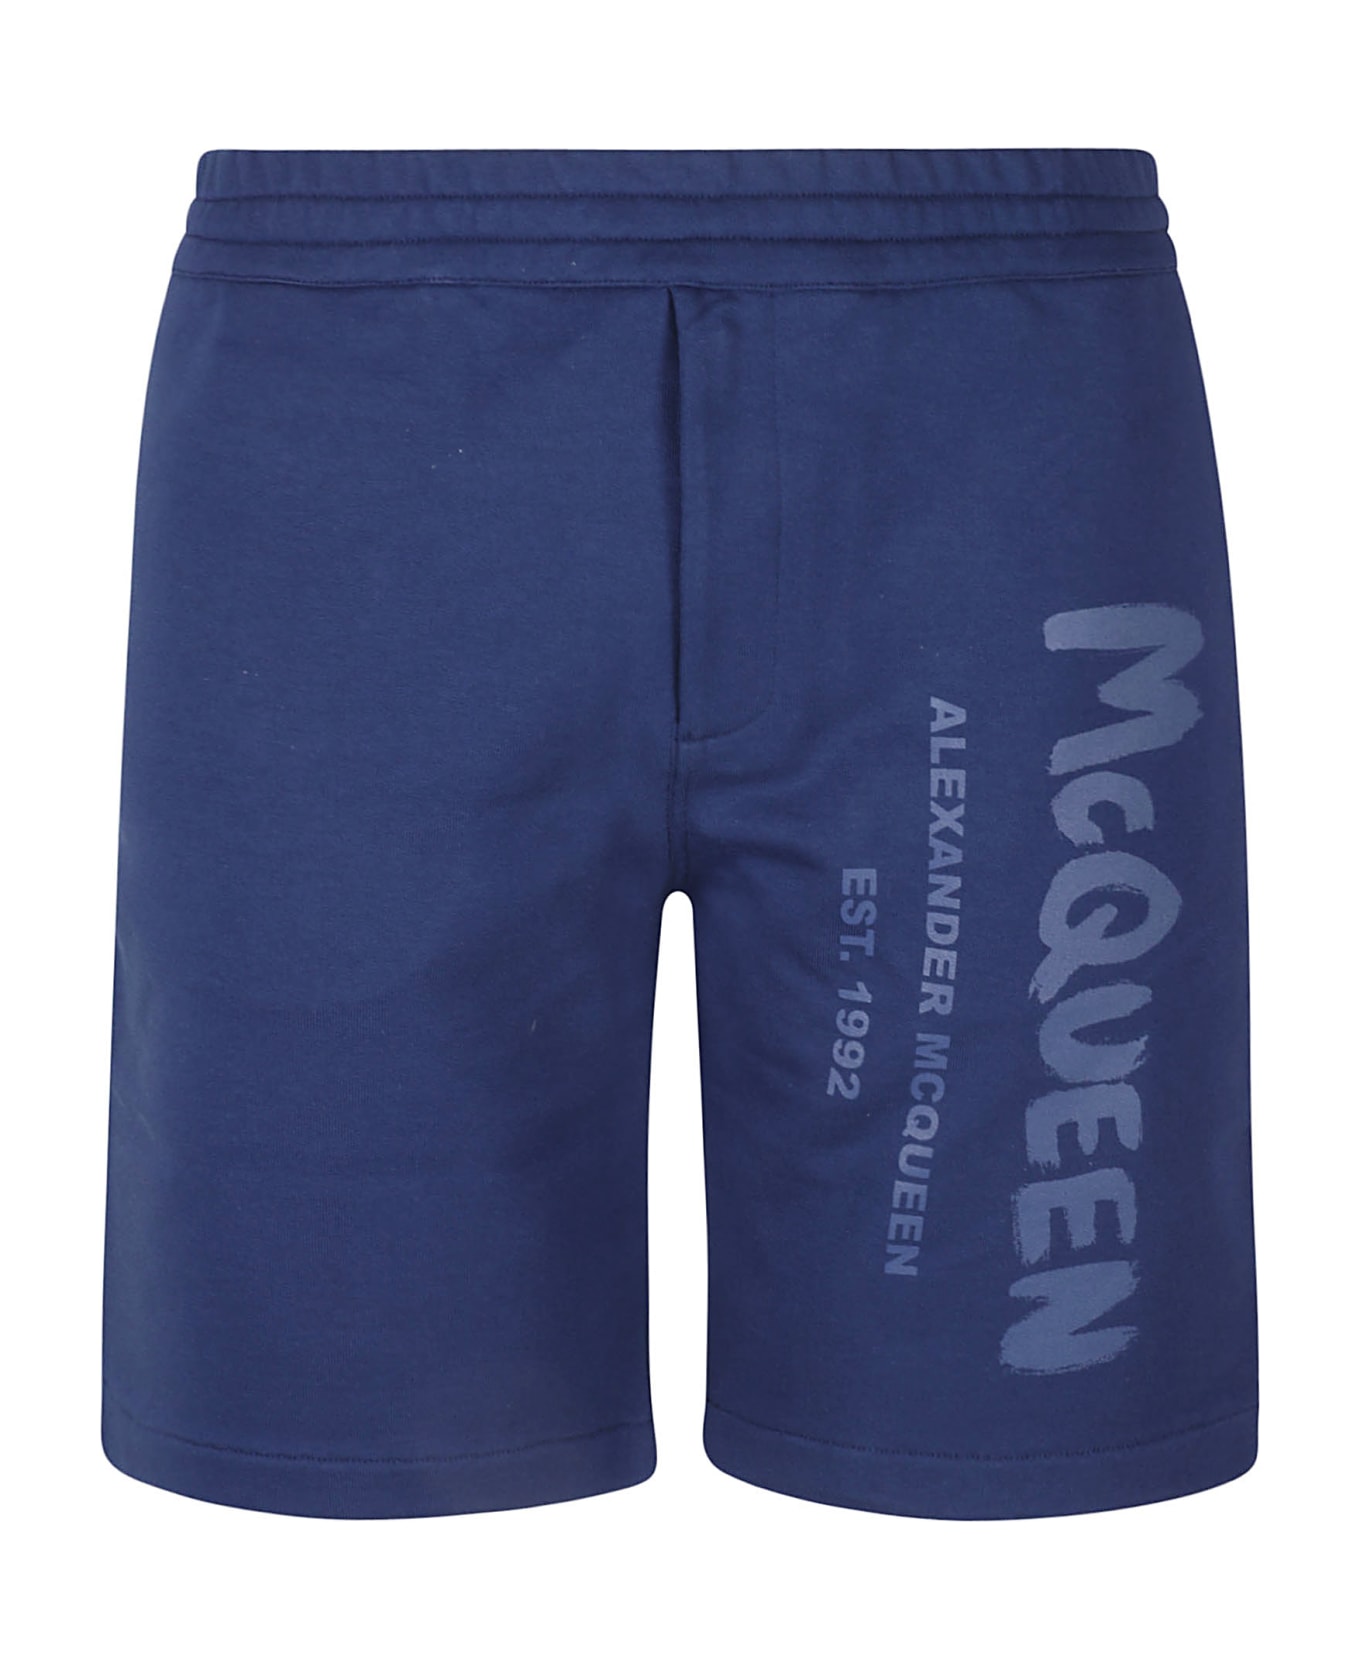 Alexander McQueen Graffiti Print Shorts - Midnight Blue/Tonal ショートパンツ